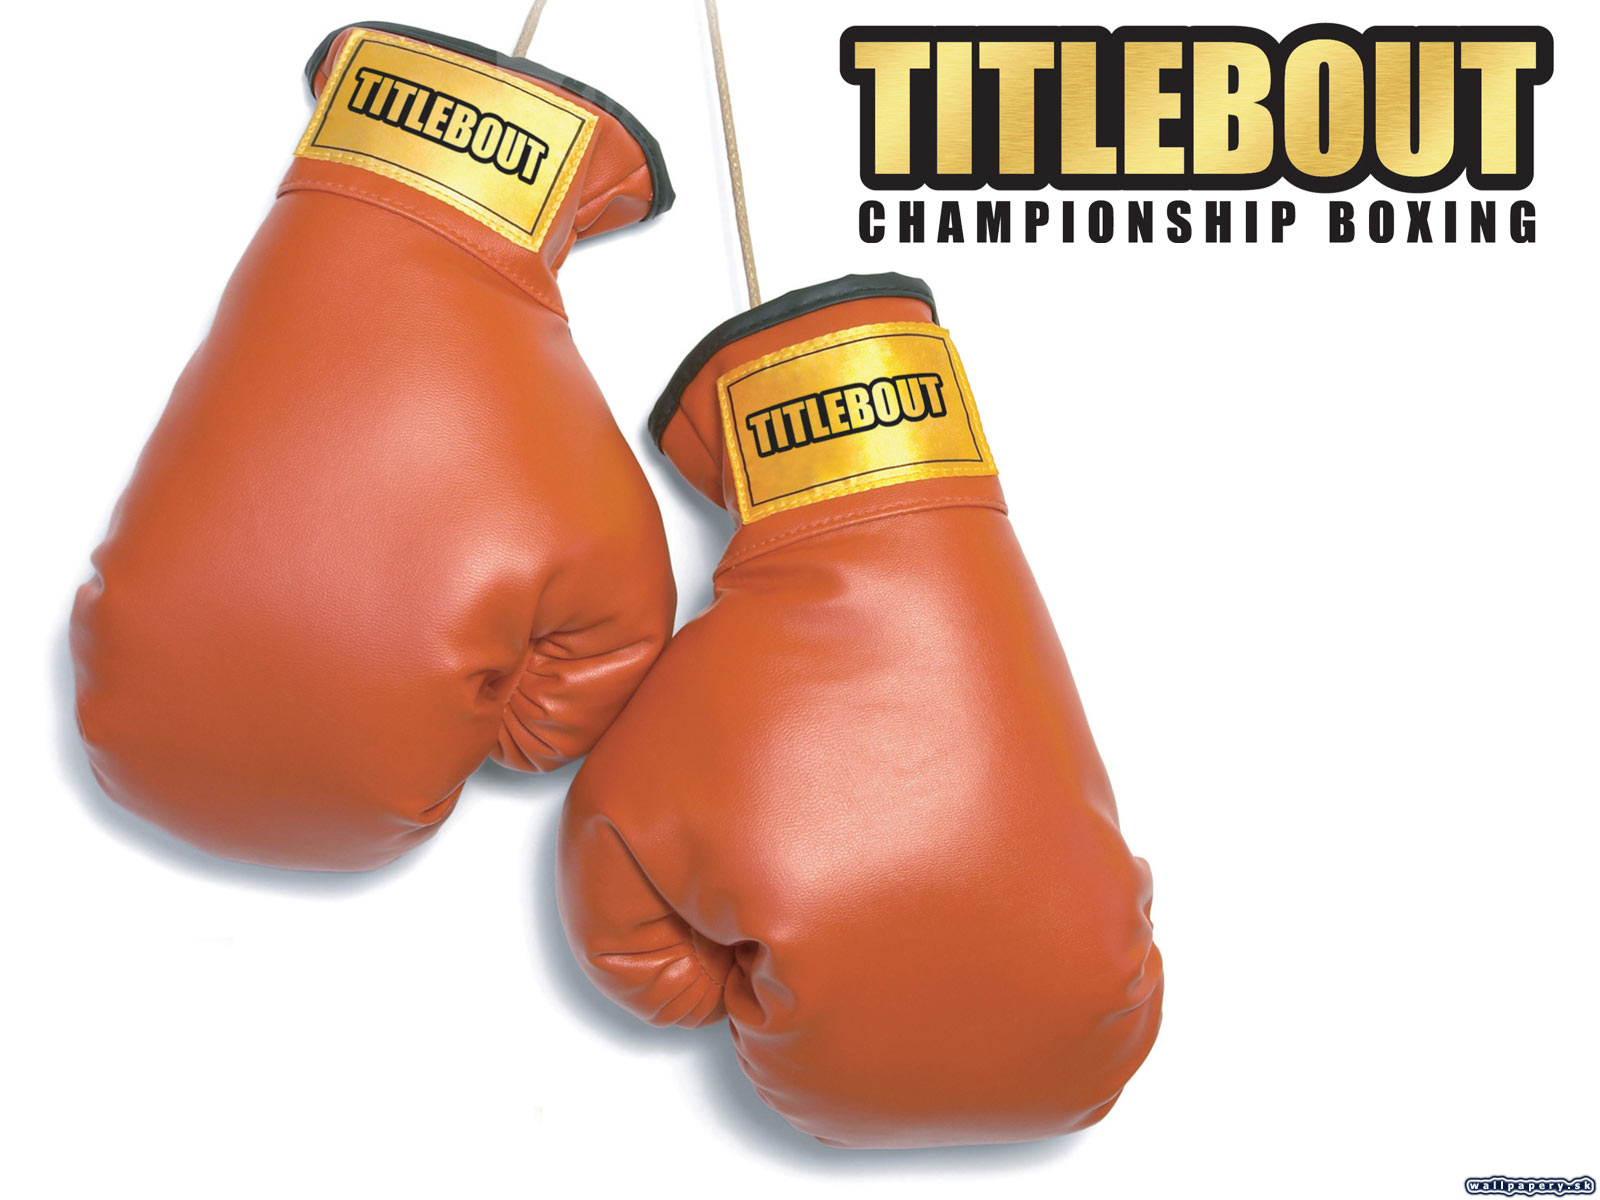 Title Bout Championship Boxing - wallpaper 1